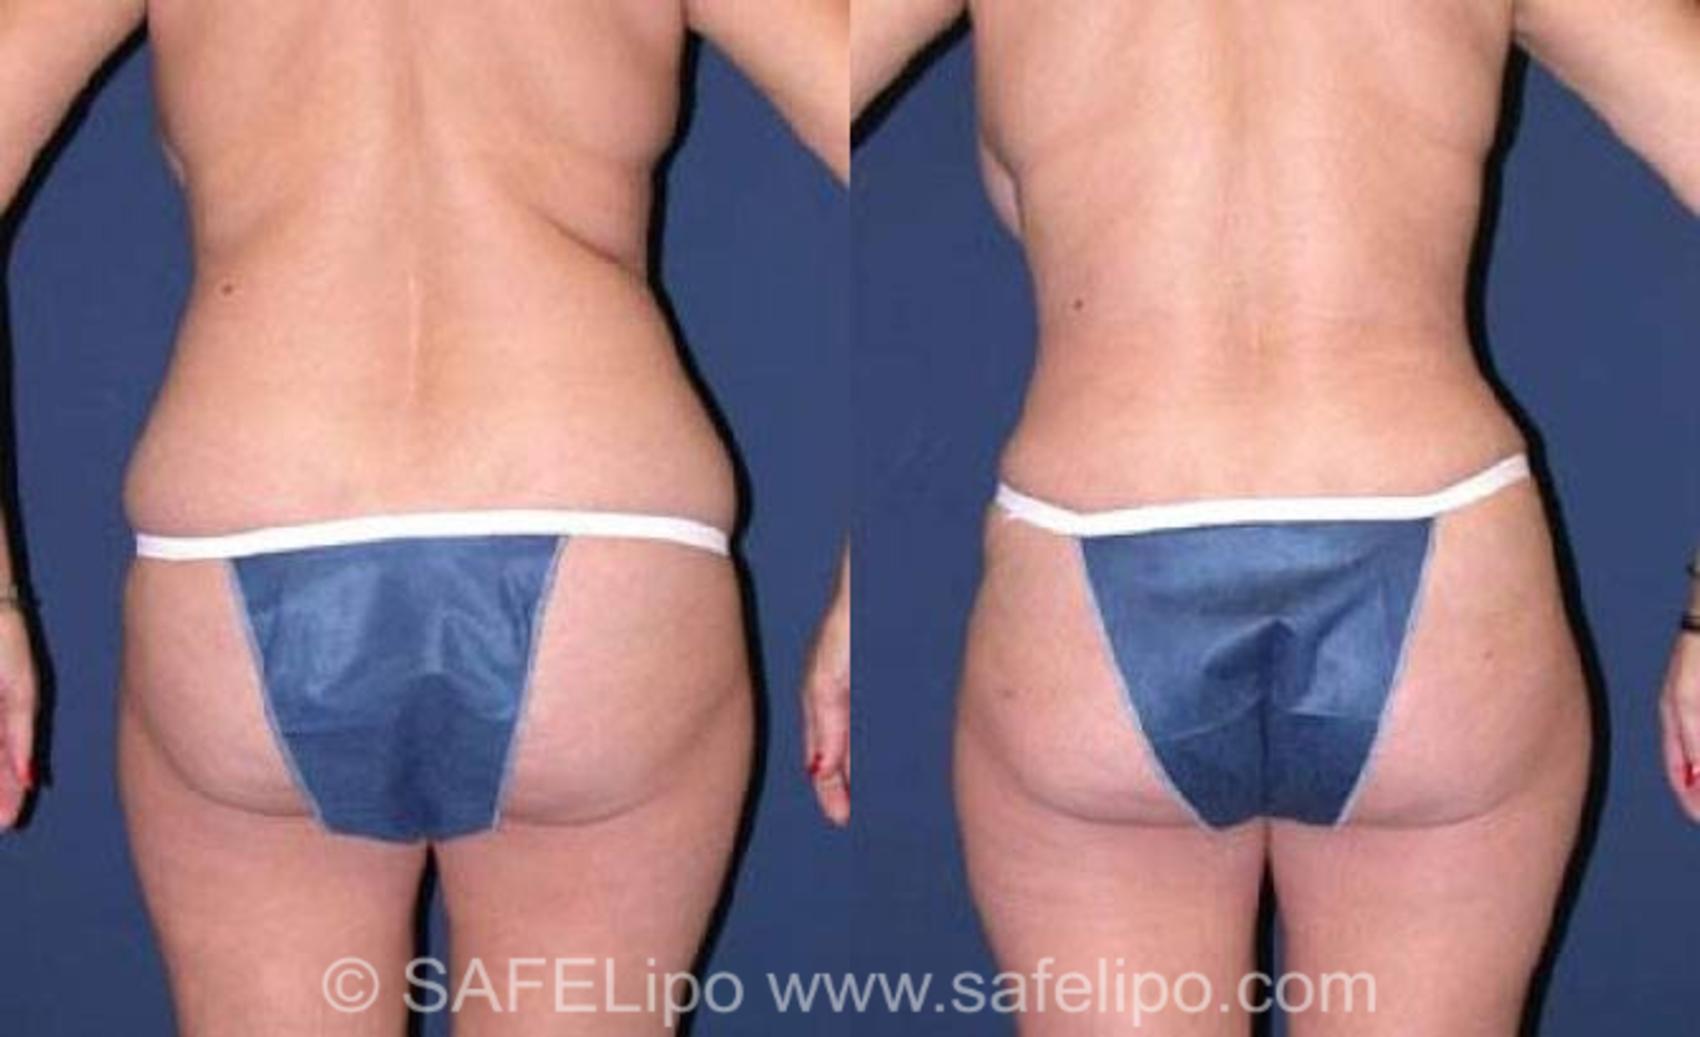 SAFELipoHD® Case 75 Before & After View #6 | SAFELipo®